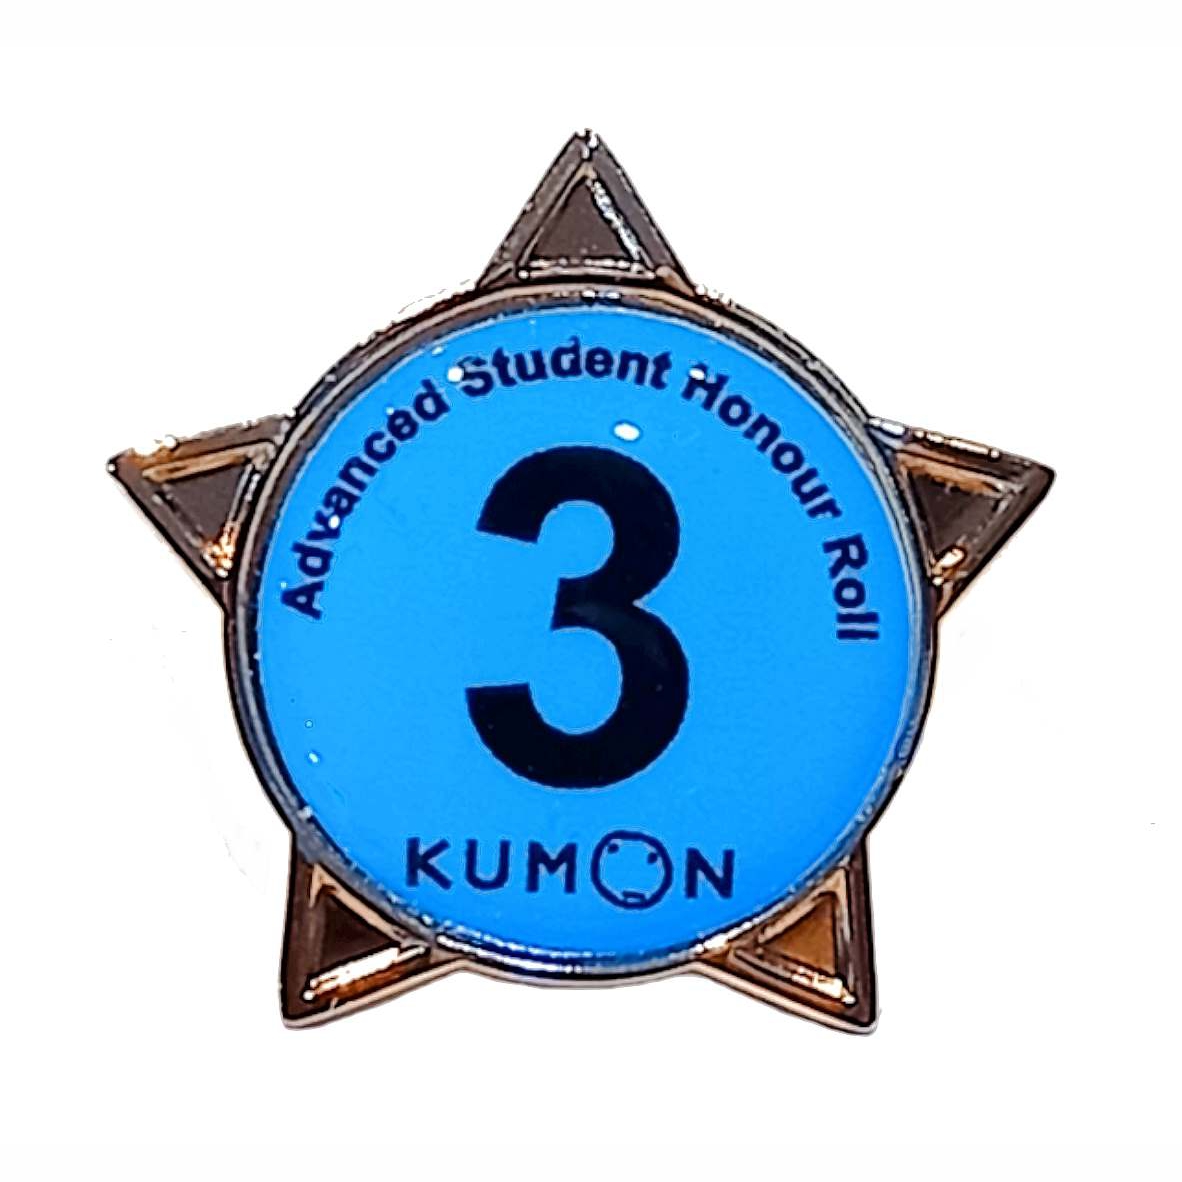 KUMON Advanced Student 3 blue